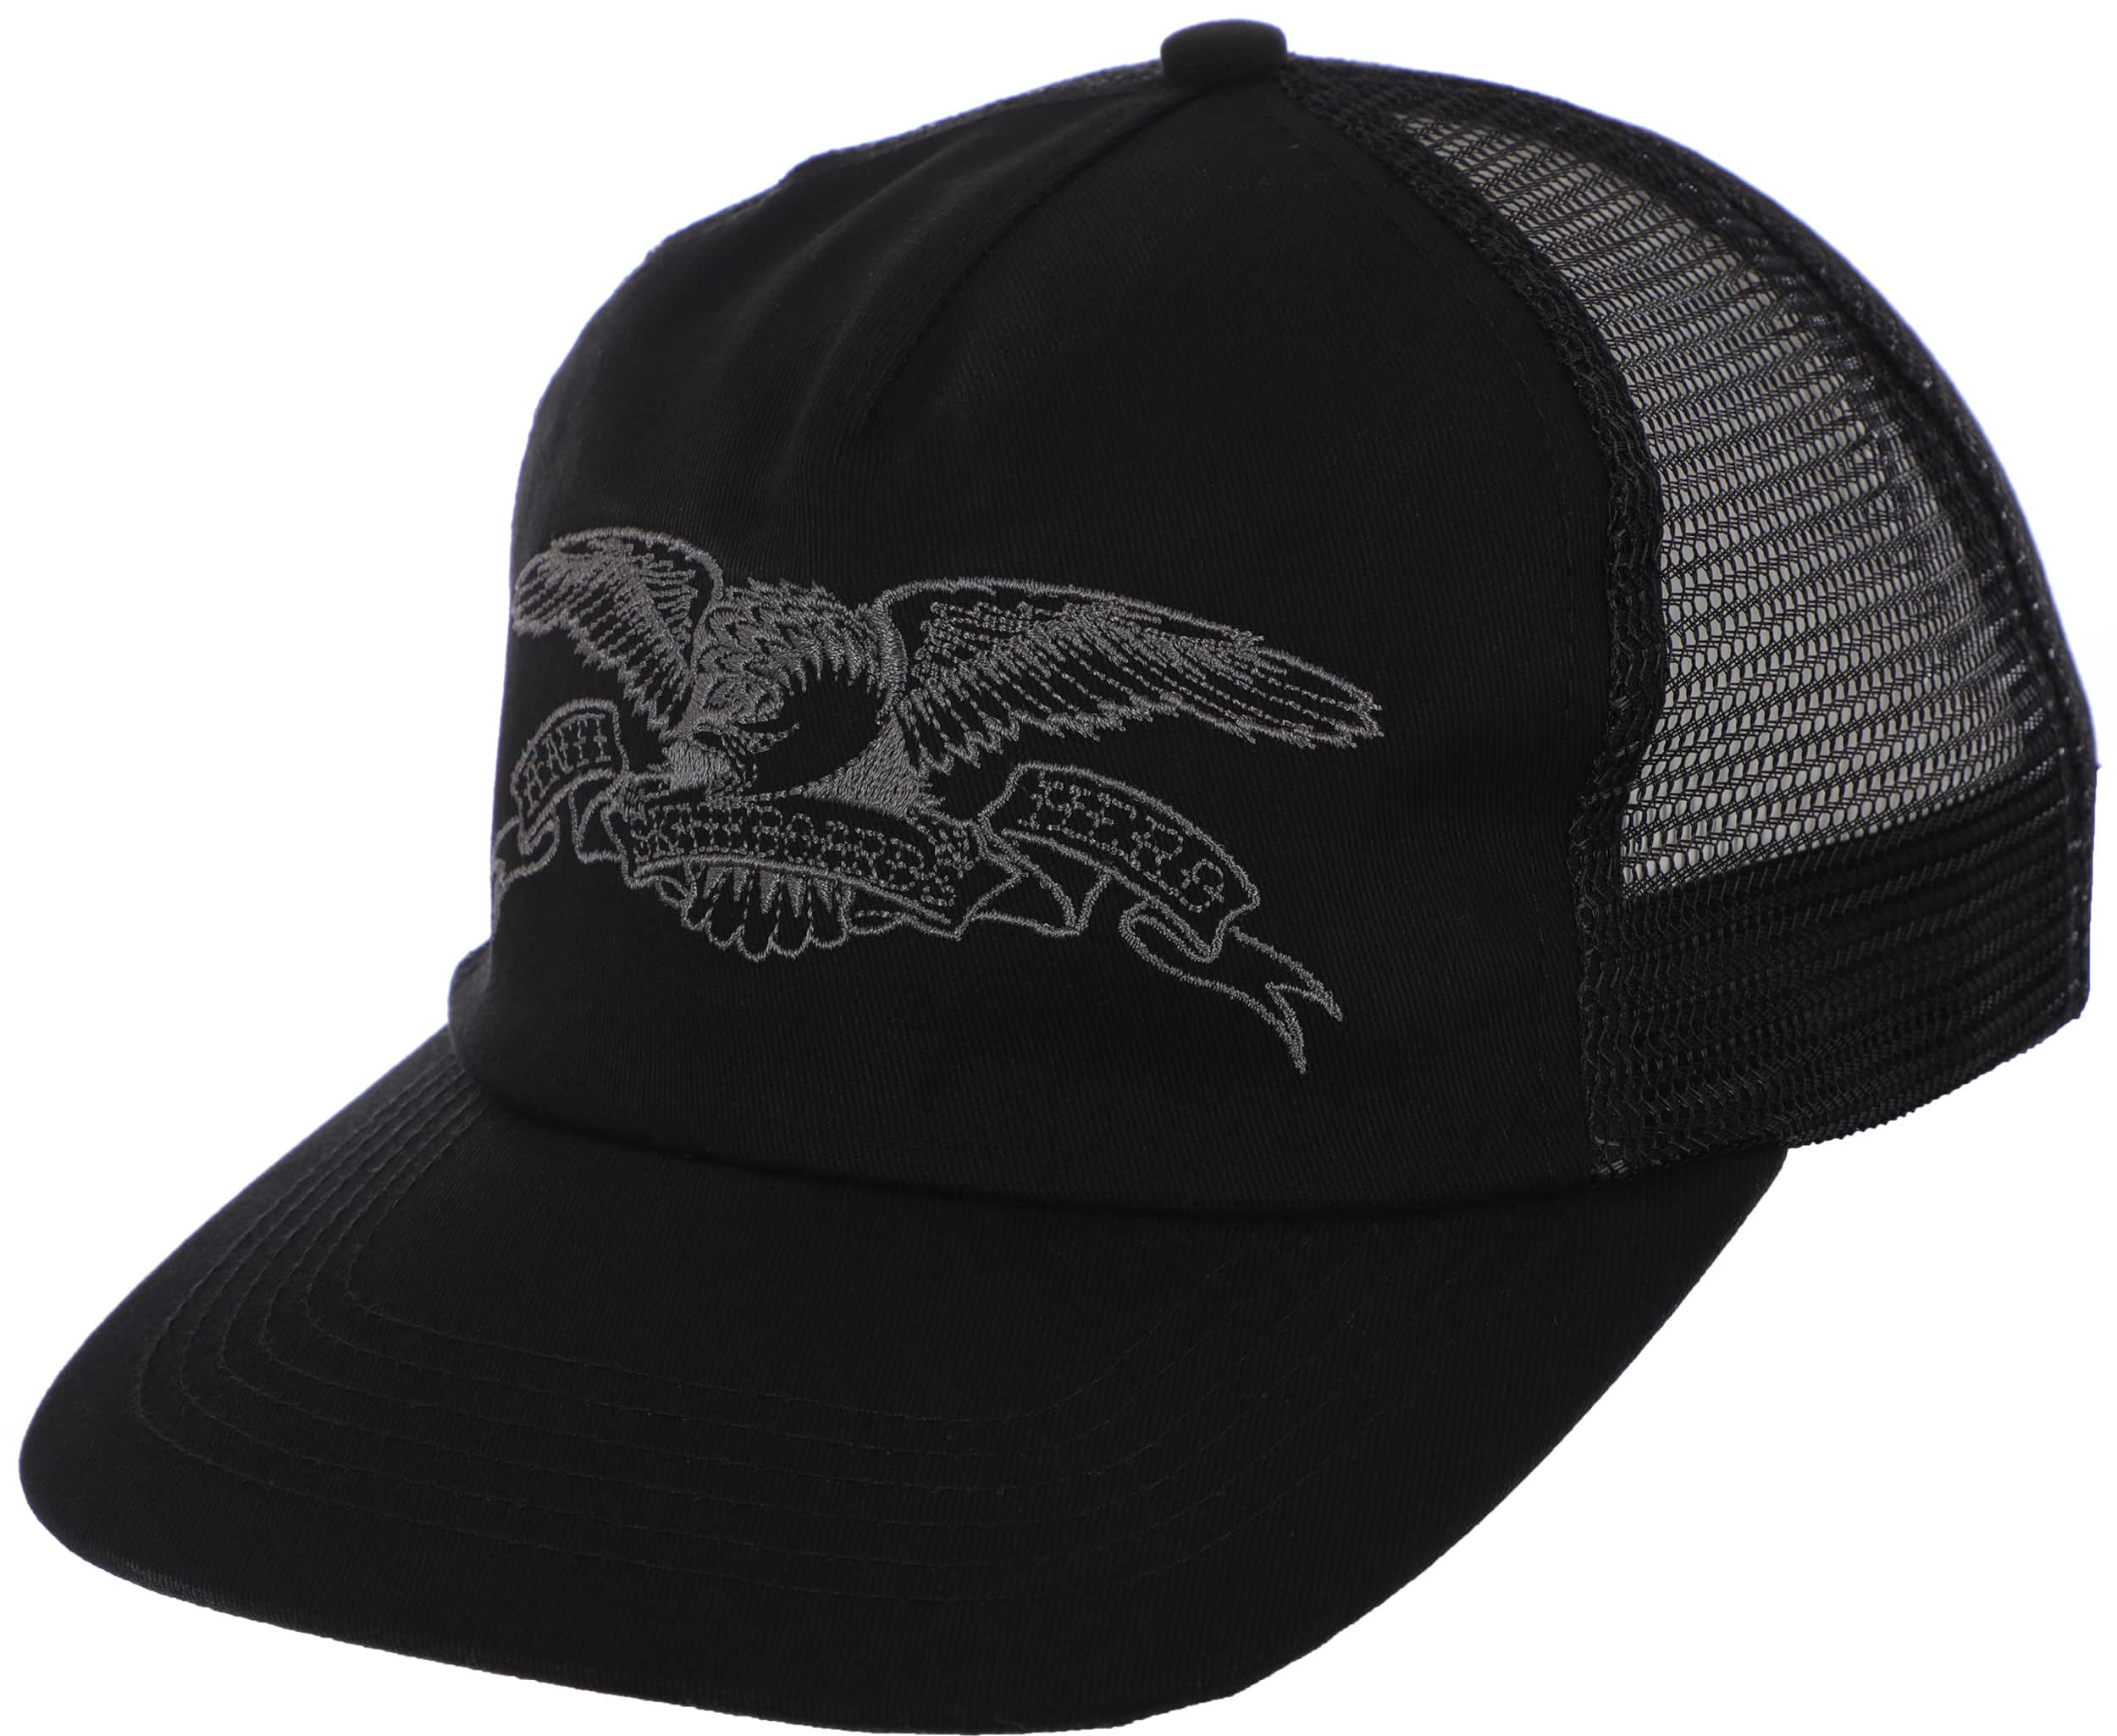 BASIC EAGLE CAP BLACK